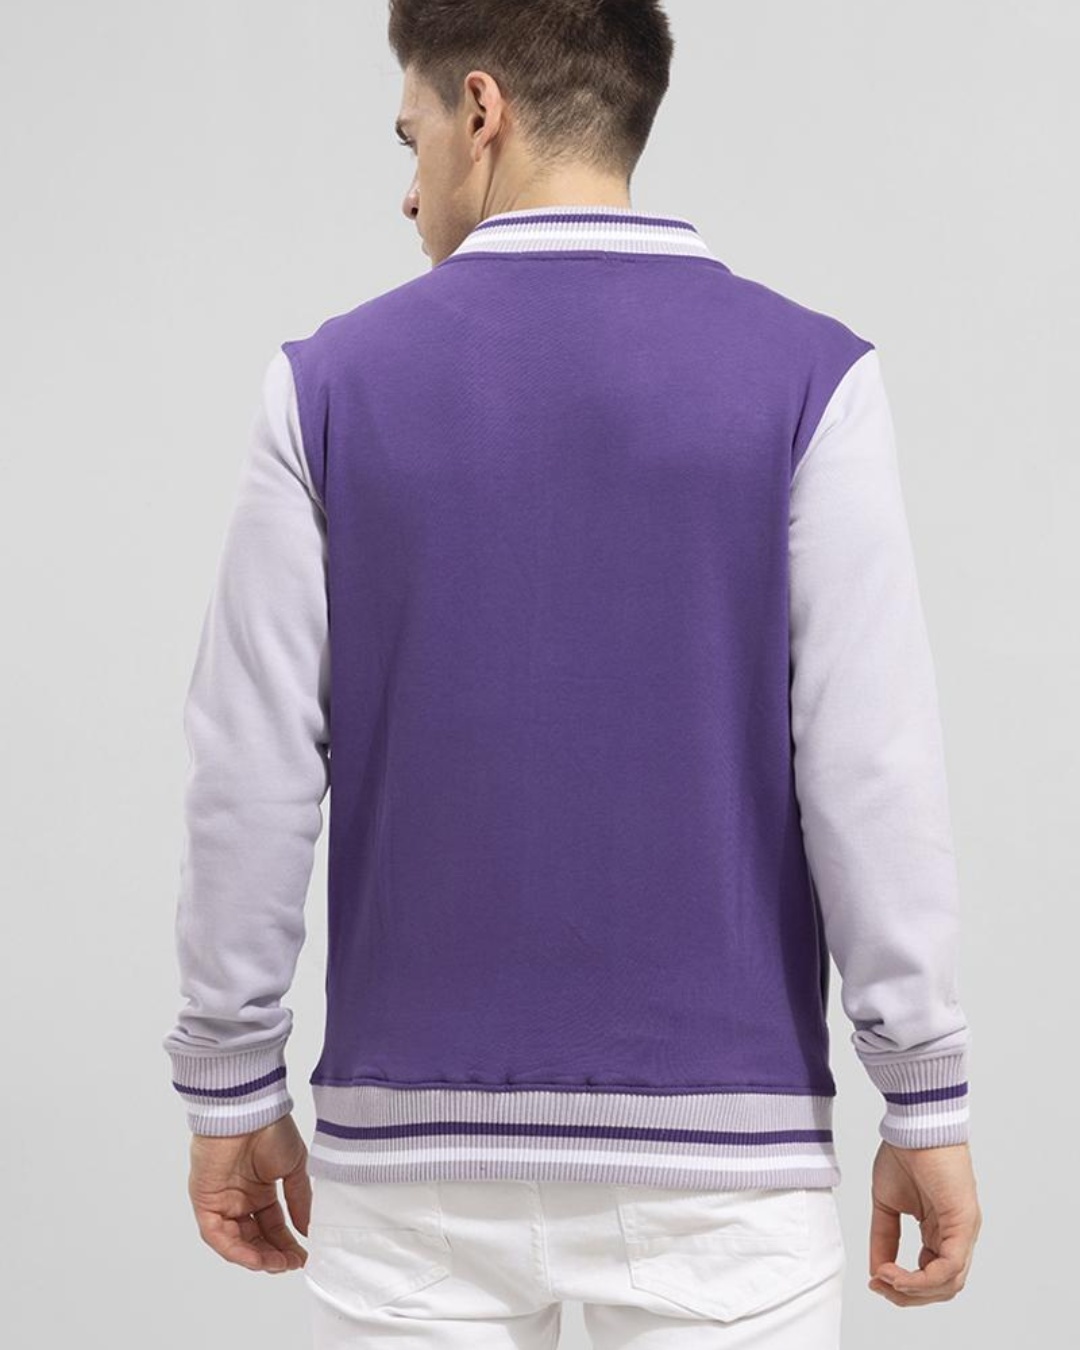 Buy Men's Purple and White Color Block Denim Jacket Online at Bewakoof